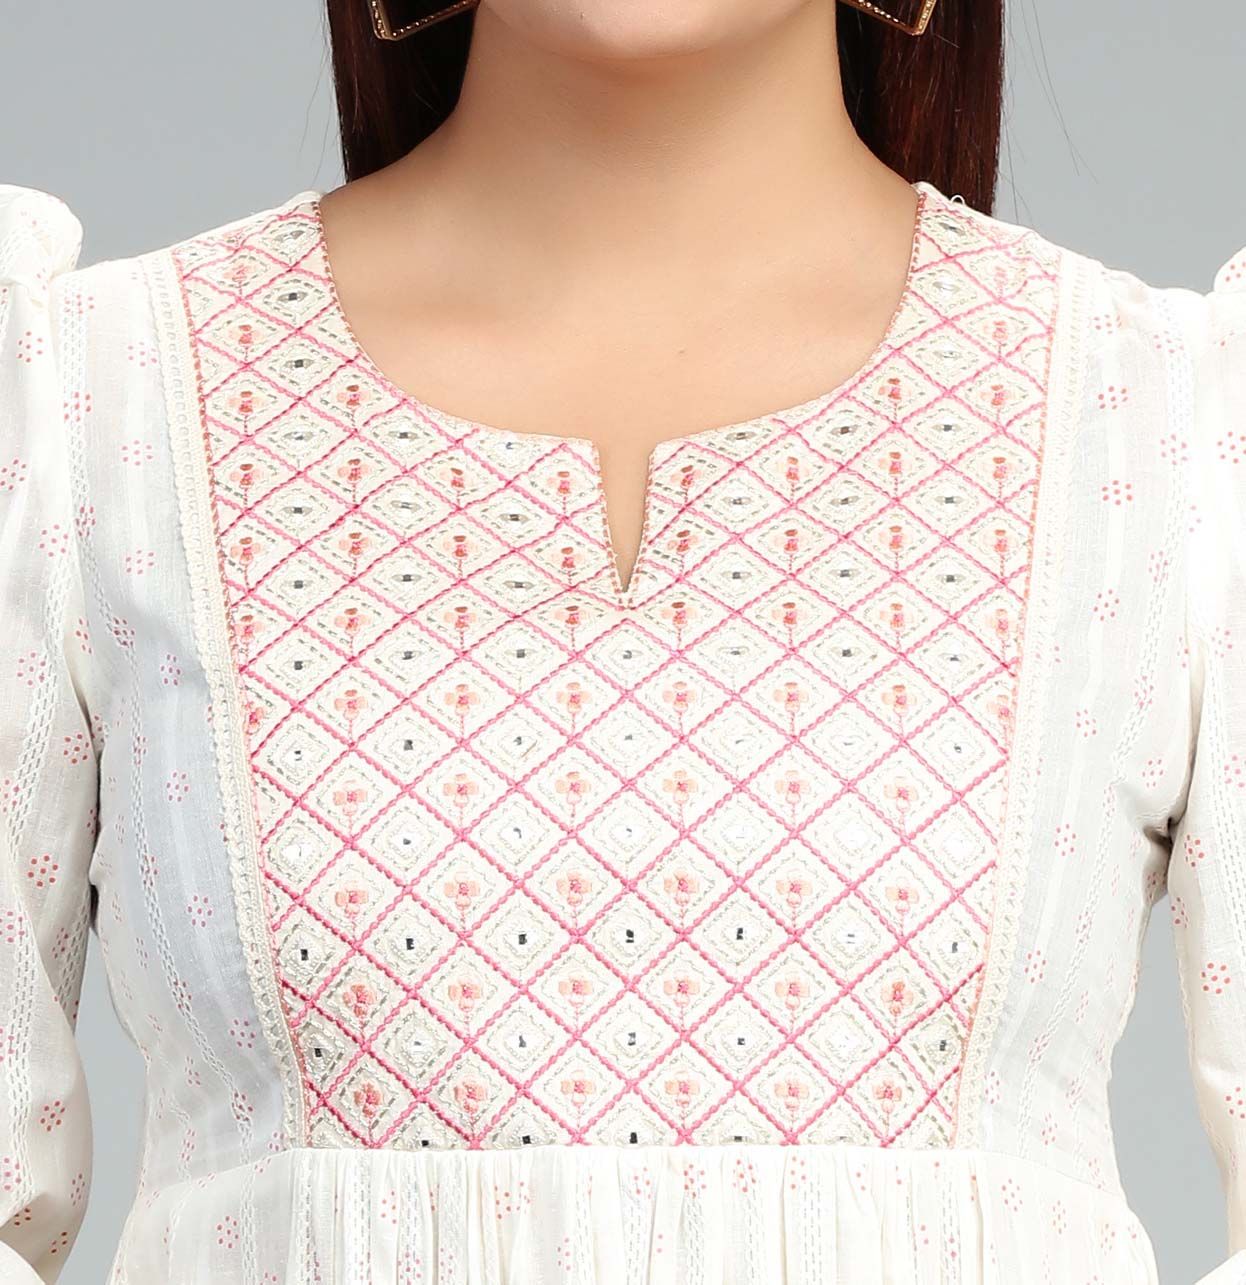 Megha CC43 White Cotton Embroidery Flared Dress